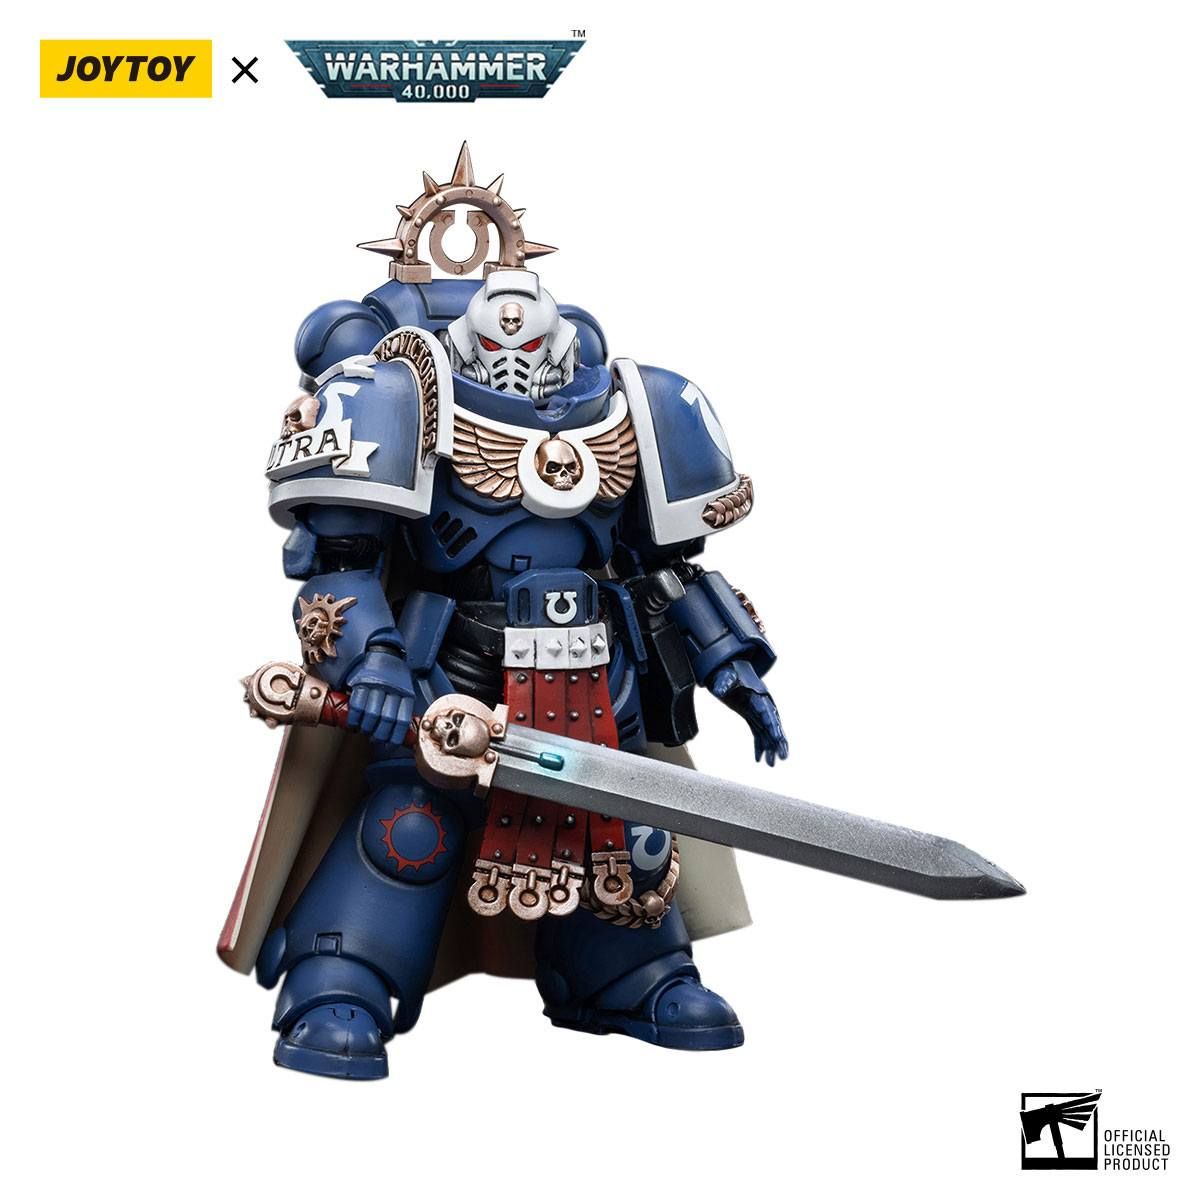 Warhammer 40k Action Figure 1/18 Ultramarines Primaris Captain 12 cm Joy Toy (CN)